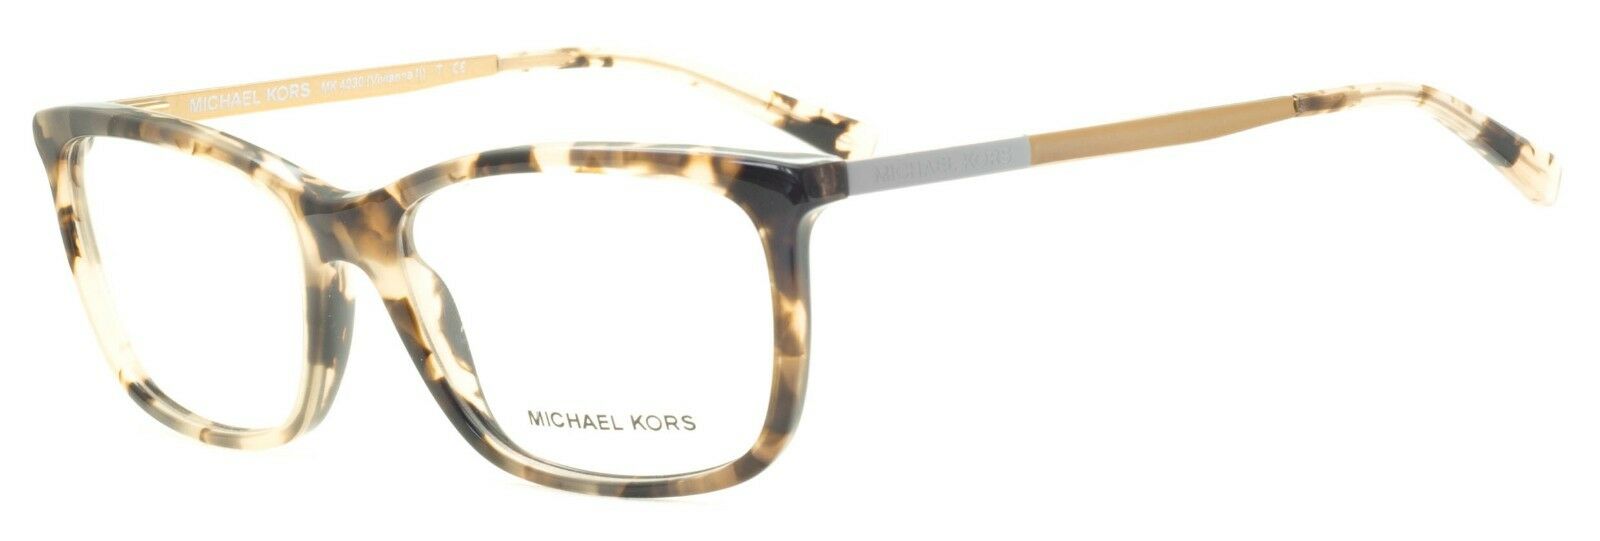 MICHAEL KORS MK 4030 3162 52mm Eyewear FRAMES RX Optical Eyeglasses Glasses -New